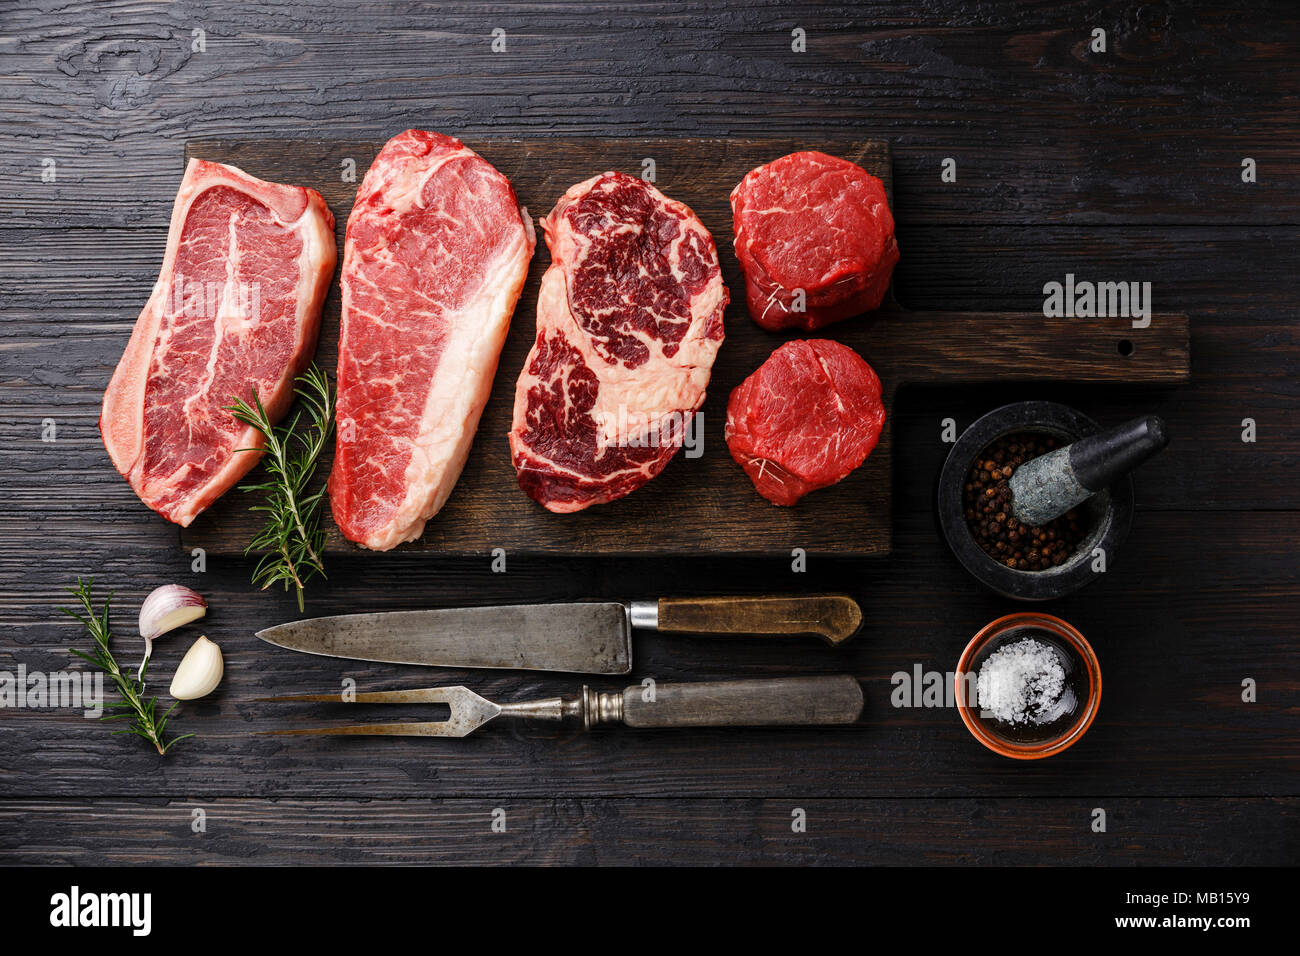 Variety of Raw Black Angus Prime meat steaks Blade on bone, Striploin, Rib eye, Tenderloin fillet mignon on wooden board Stock Photo